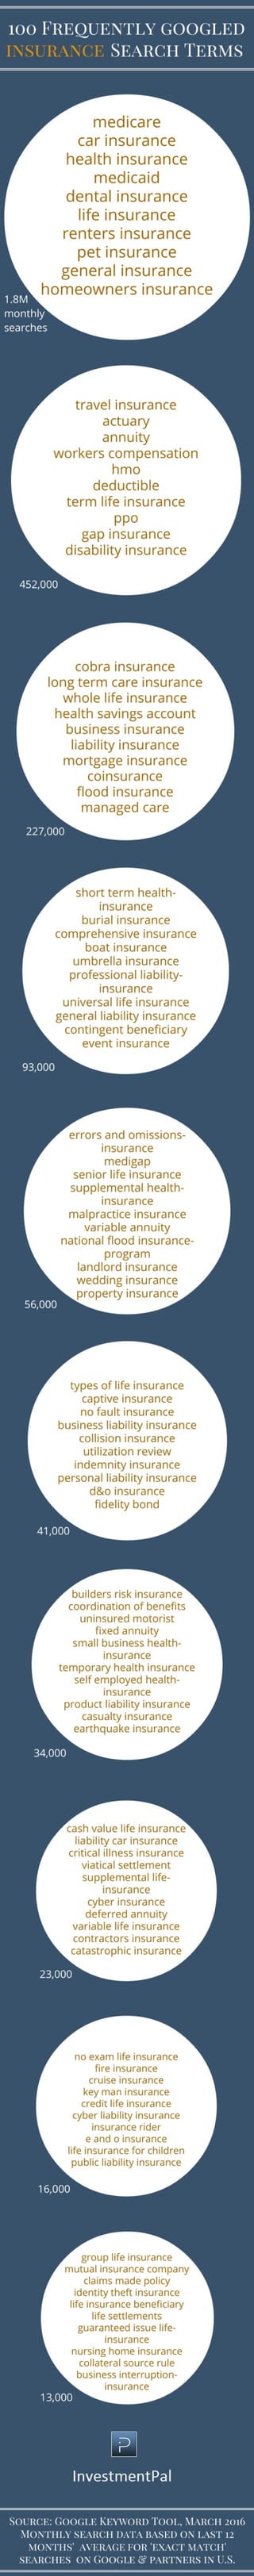 Insurance topics